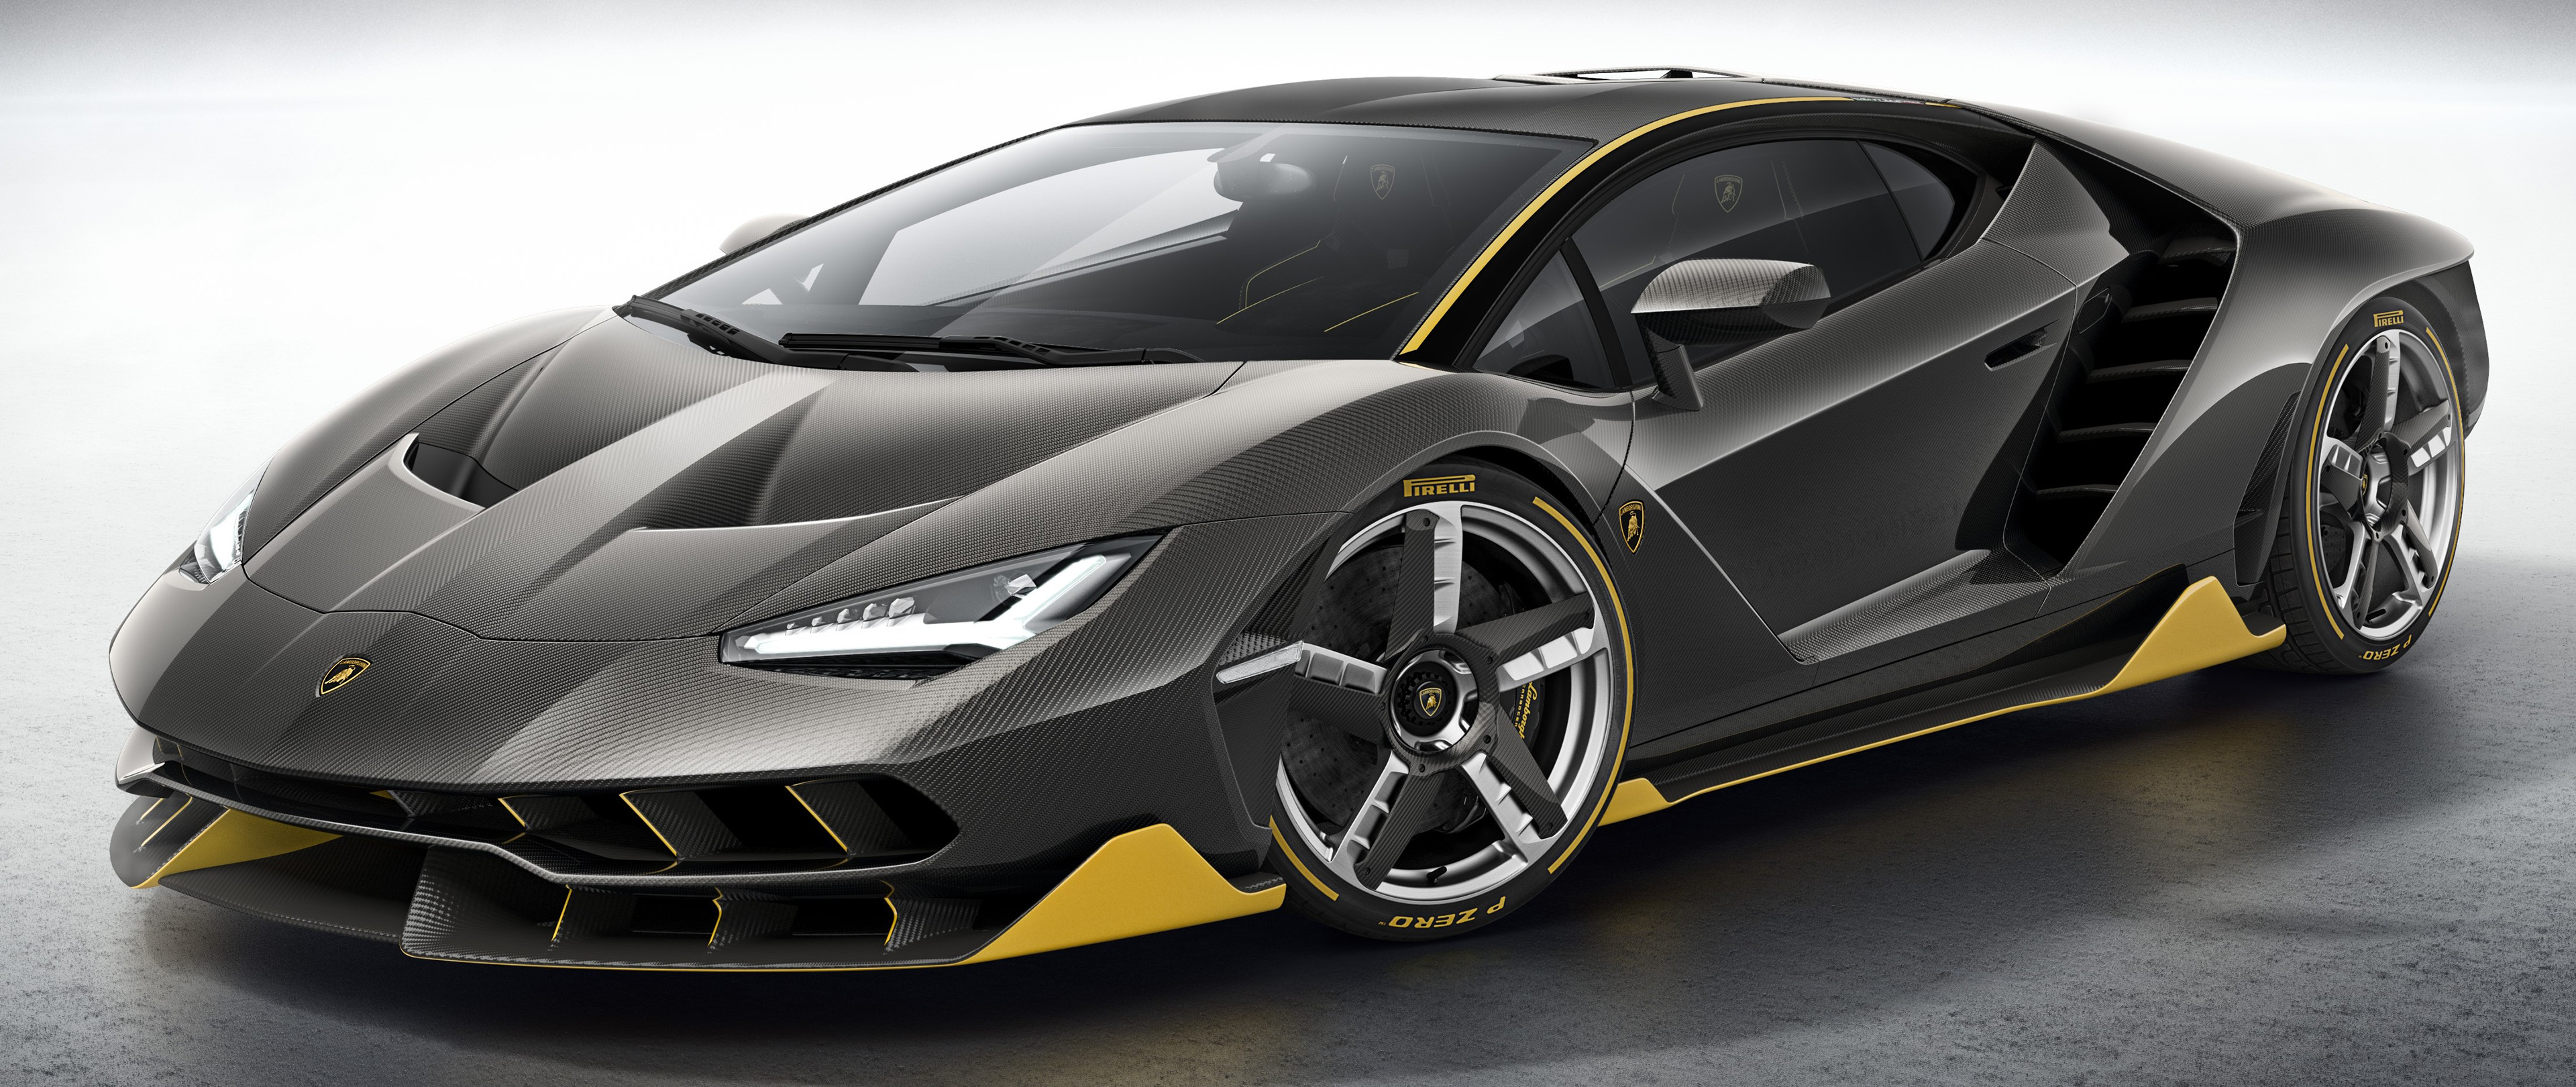 Lamborghini Centenario LP770 4 Car Vehicle Super Car Wallpaper -  Resolution:3840x1620 - ID:174559 